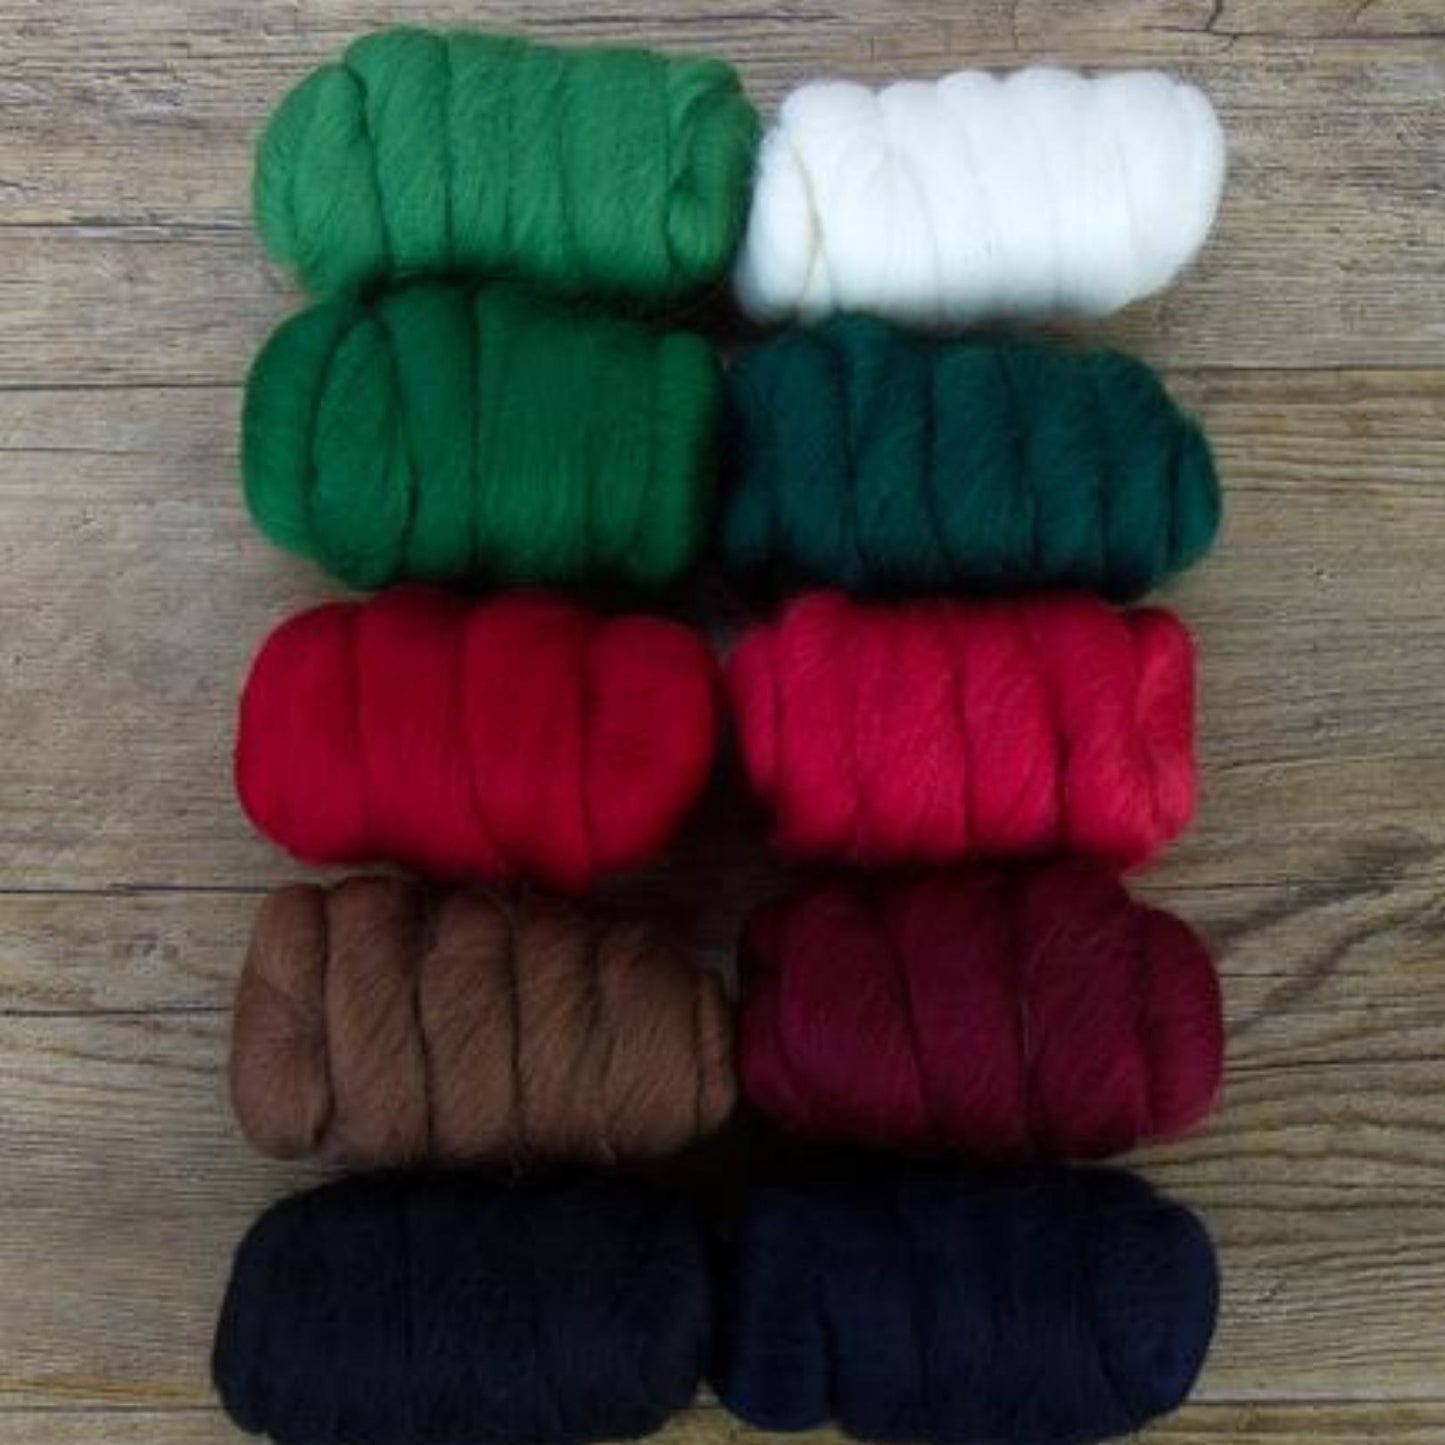 Mixed Merino Wool Variety Pack | Holiday Cheer (Multicolored) 250 Grams, 23 Micron